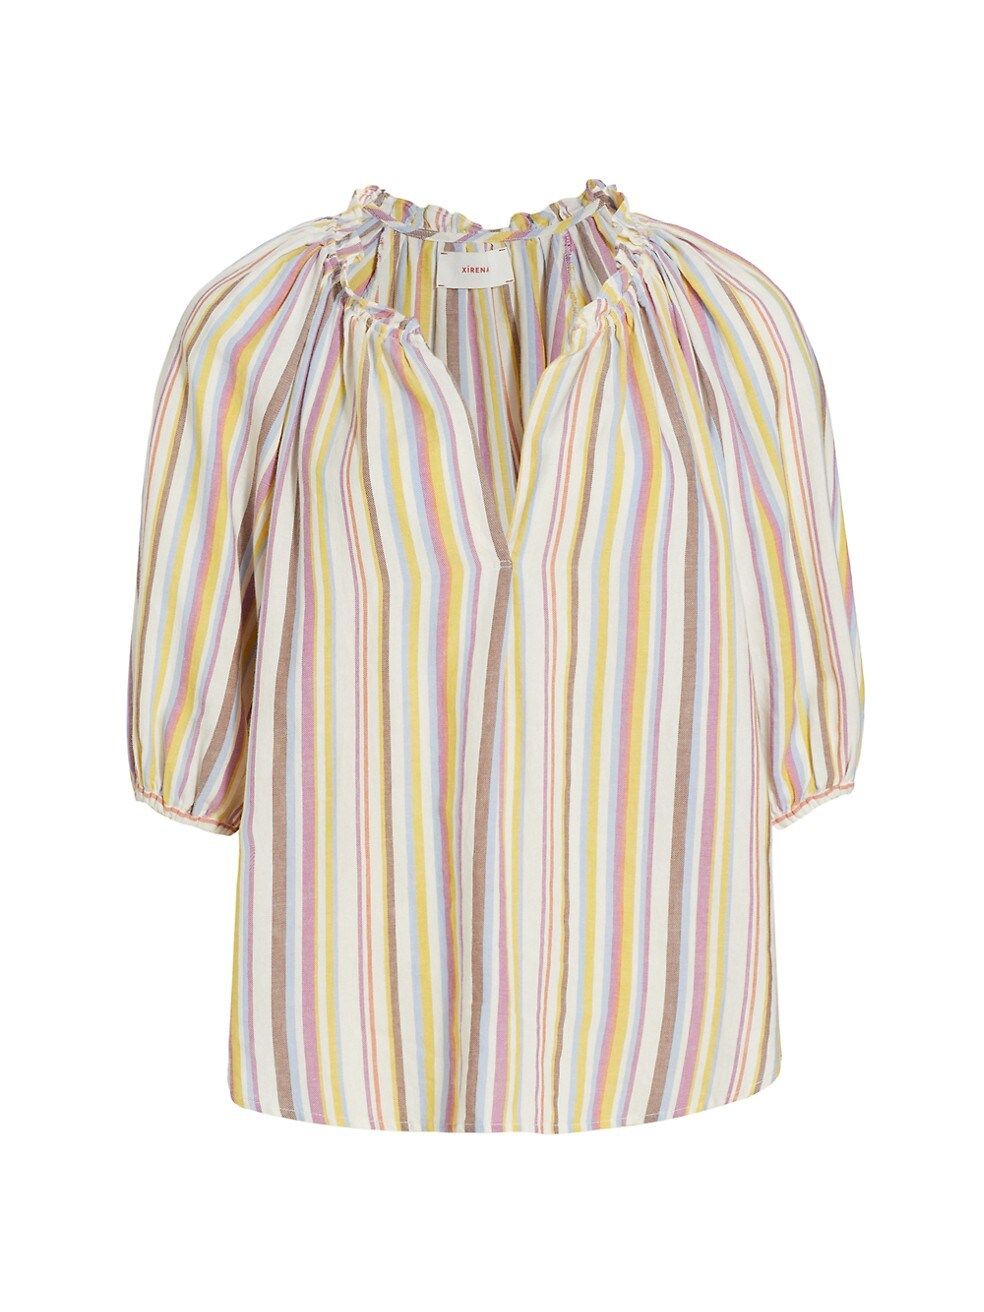 Xirena Jules Stripe Cotton Pullover Top | Saks Fifth Avenue